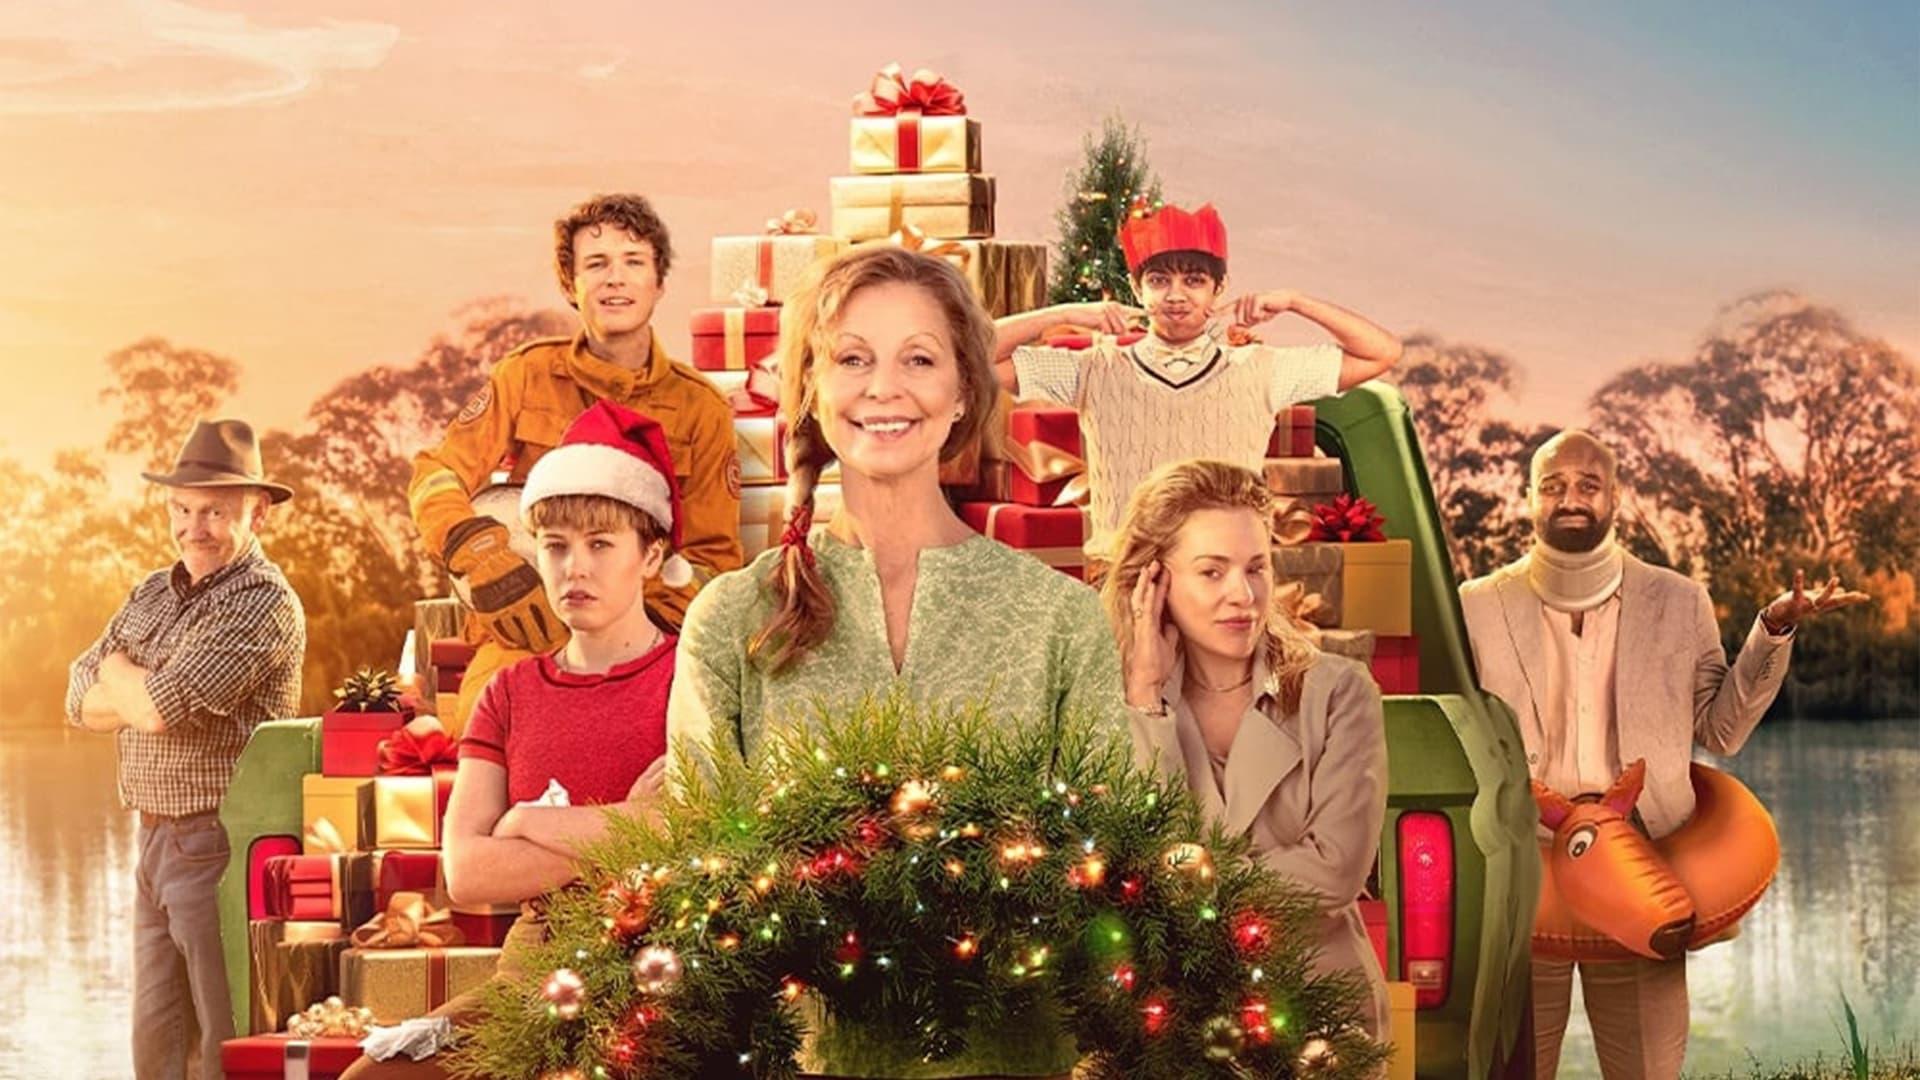 Jones Family Christmas backdrop